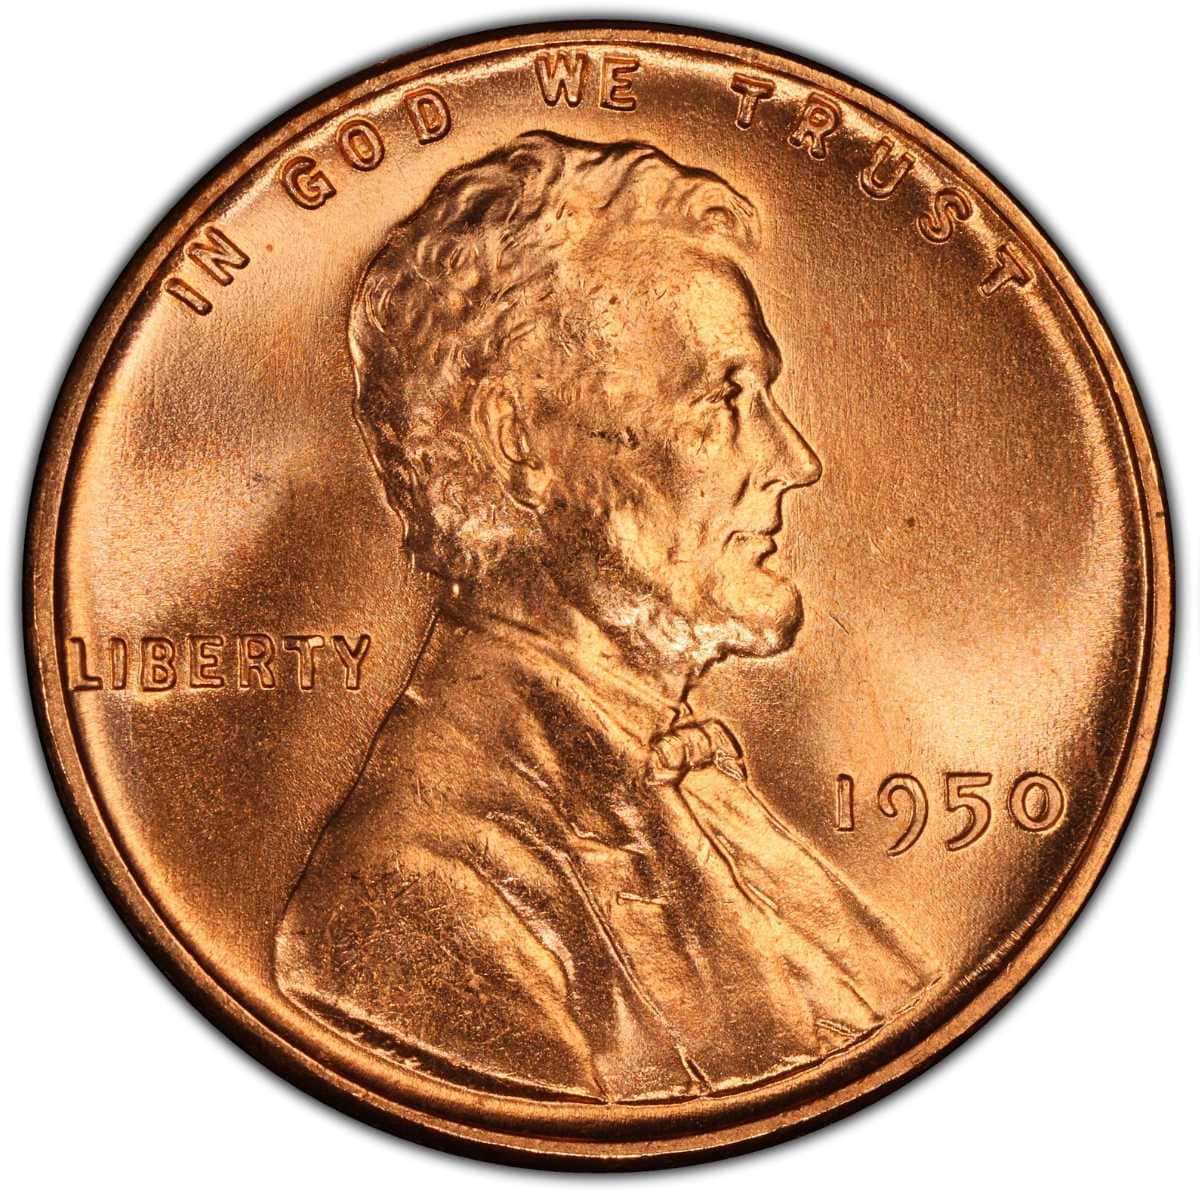 1950 Penny worth